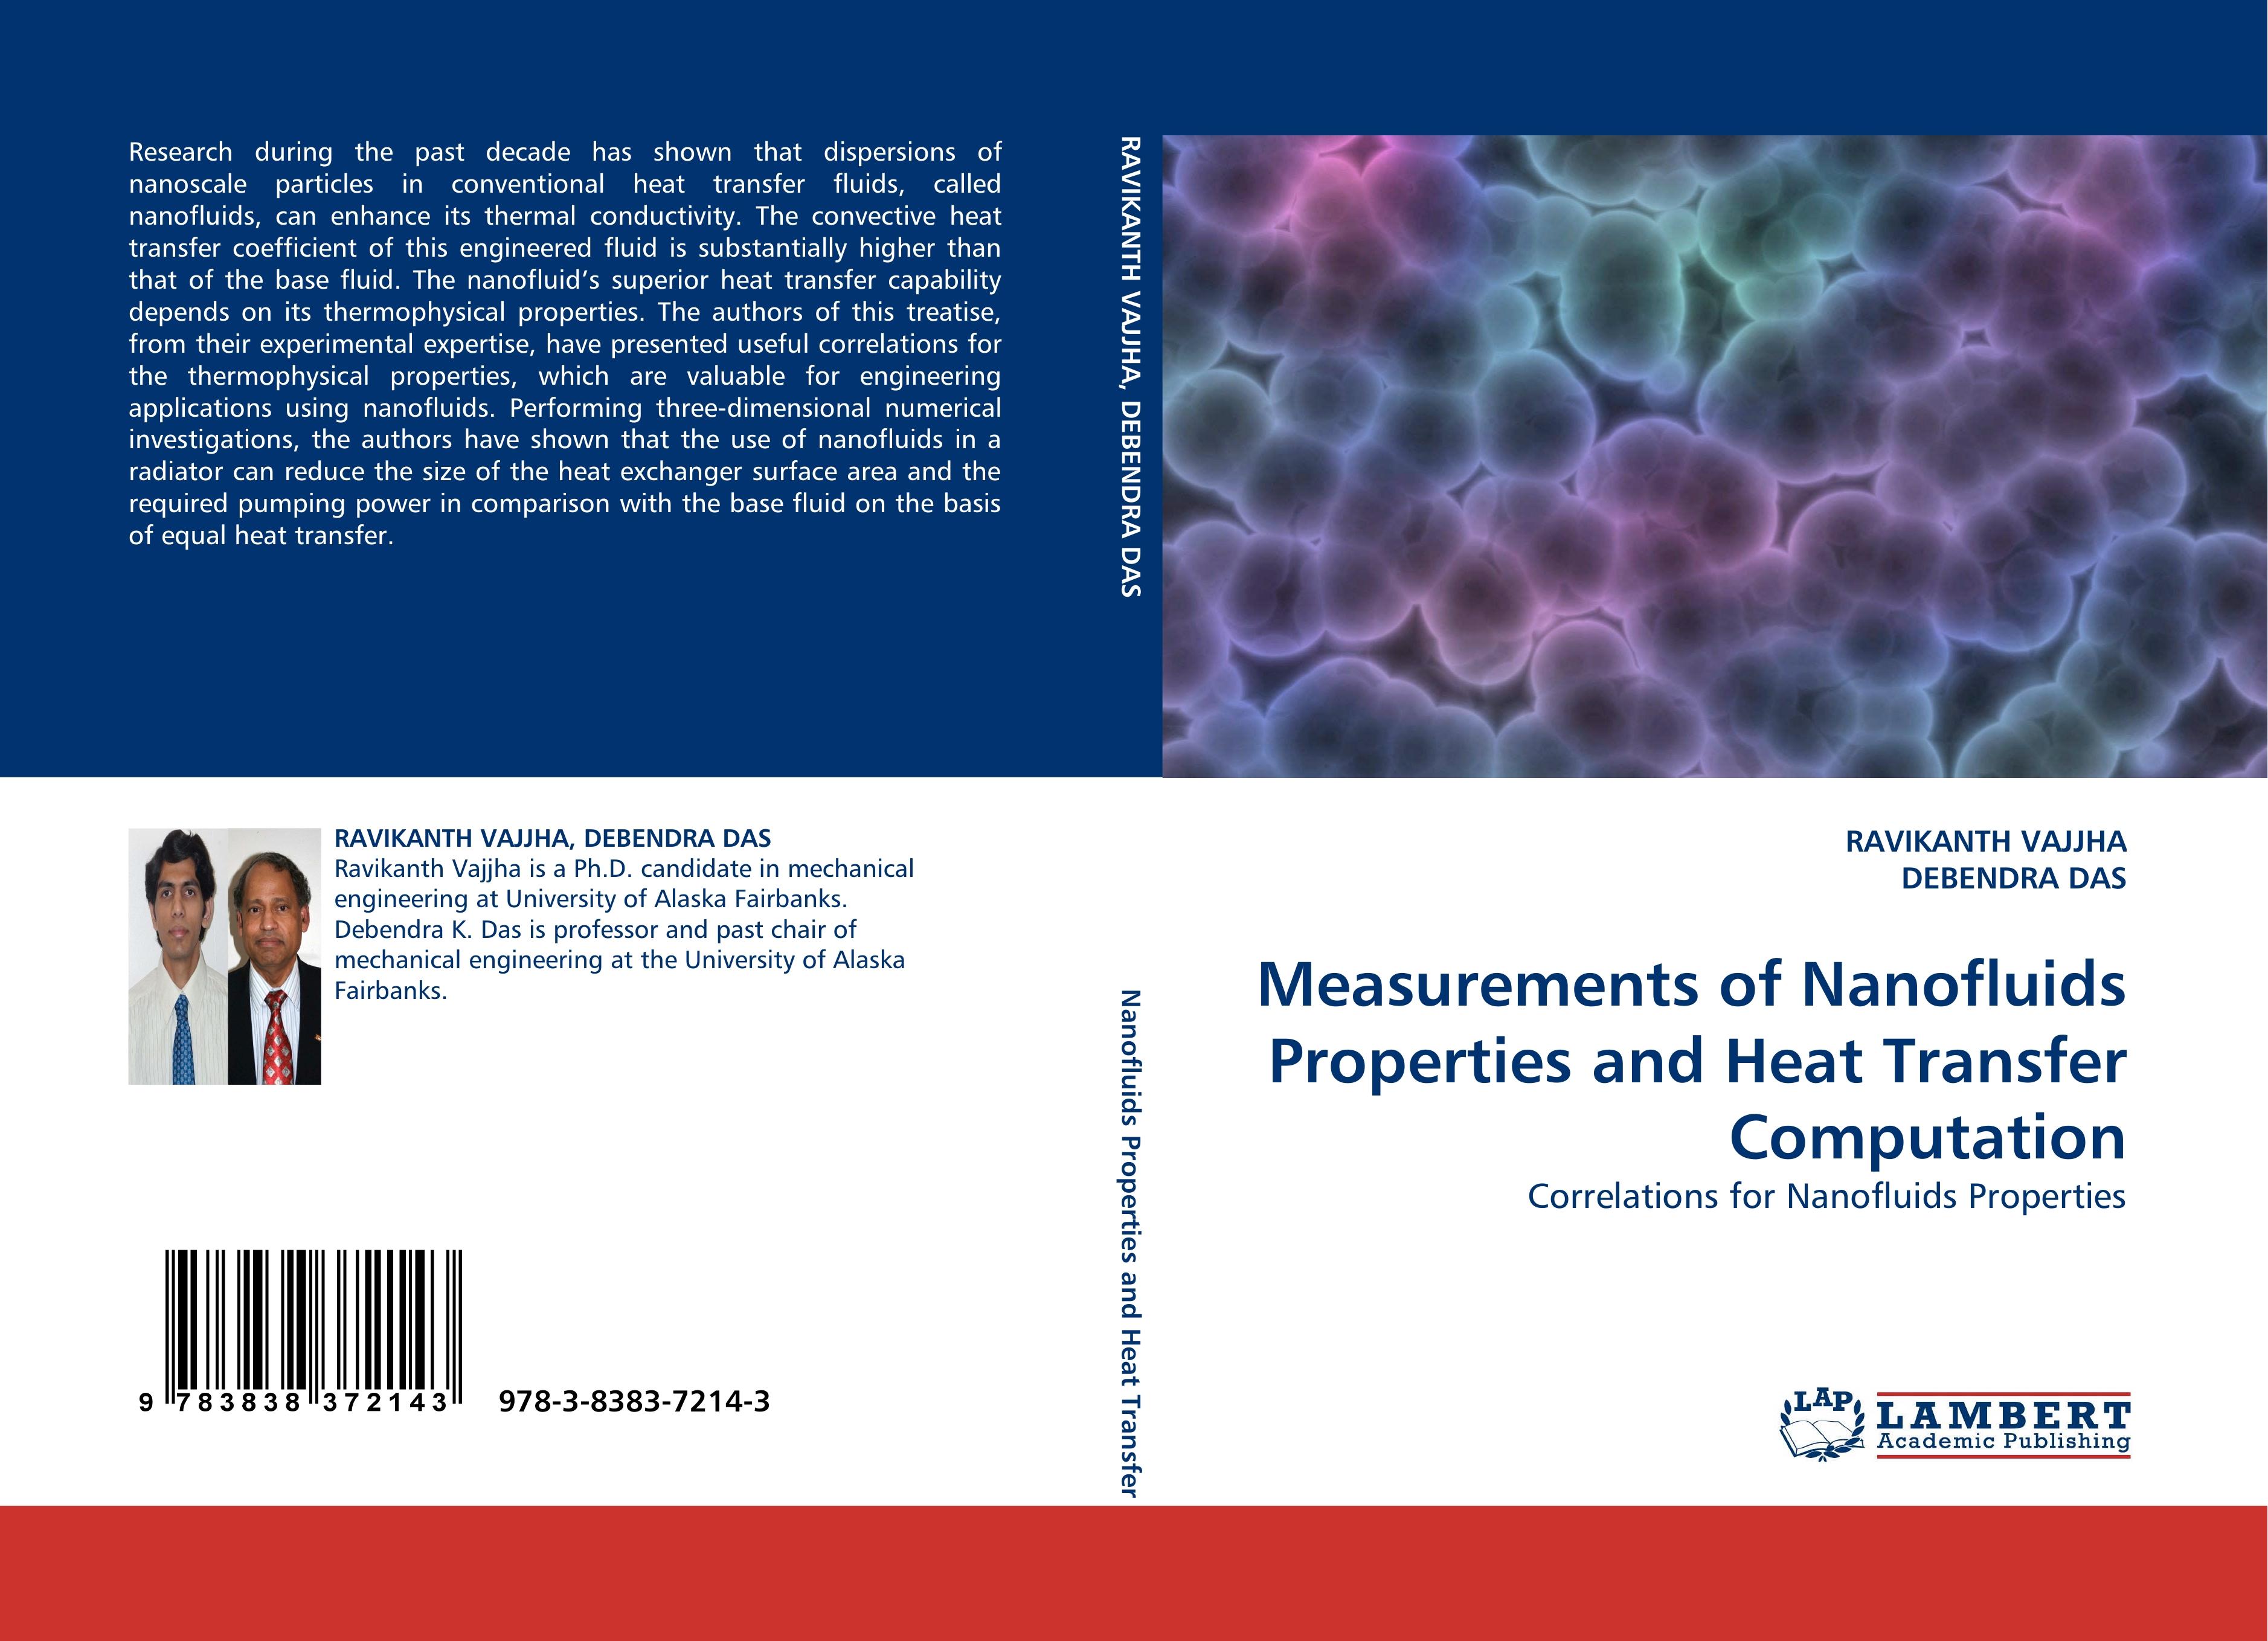 Measurements of Nanofluids Properties and Heat Transfer Computation - RAVIKANTH VAJJHA DEBENDRA DAS